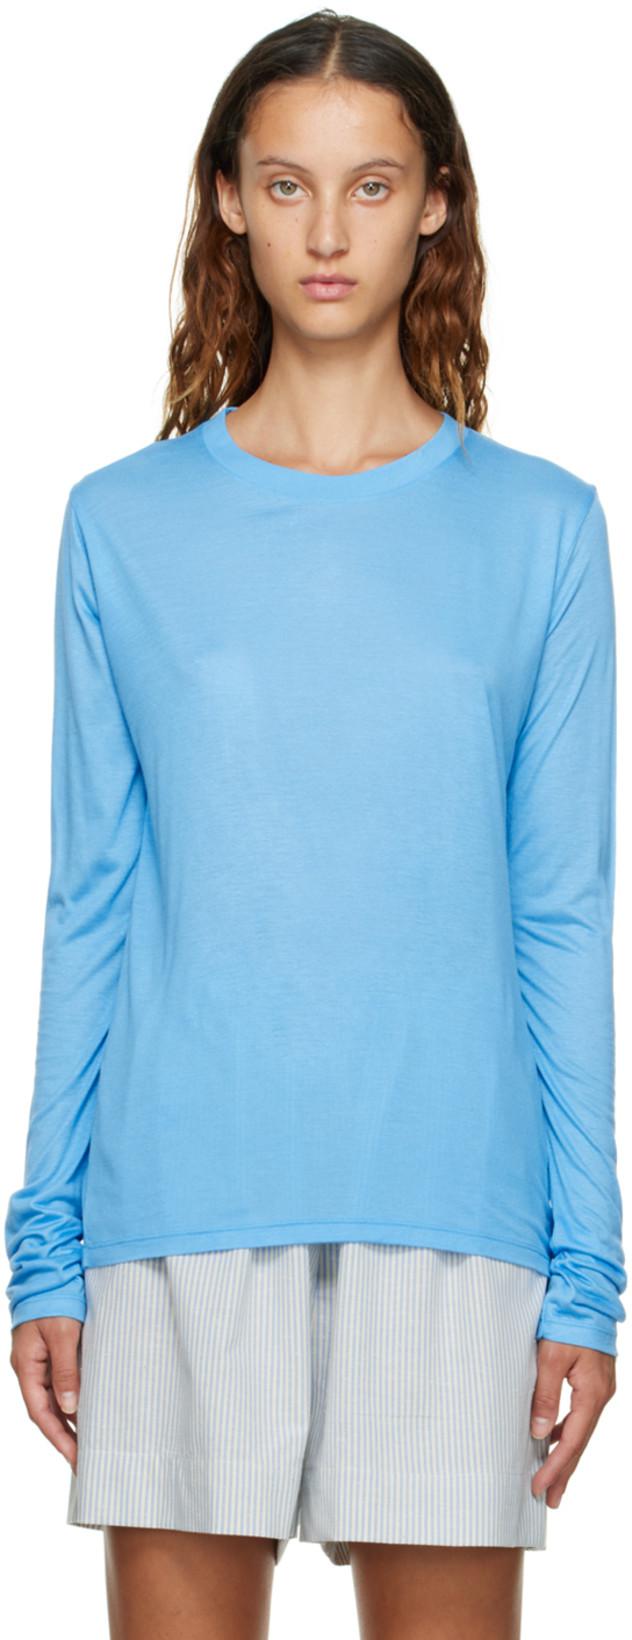 SSENSE Exclusive Blue Semi-Sheer Long Sleeve T-Shirt by BASERANGE